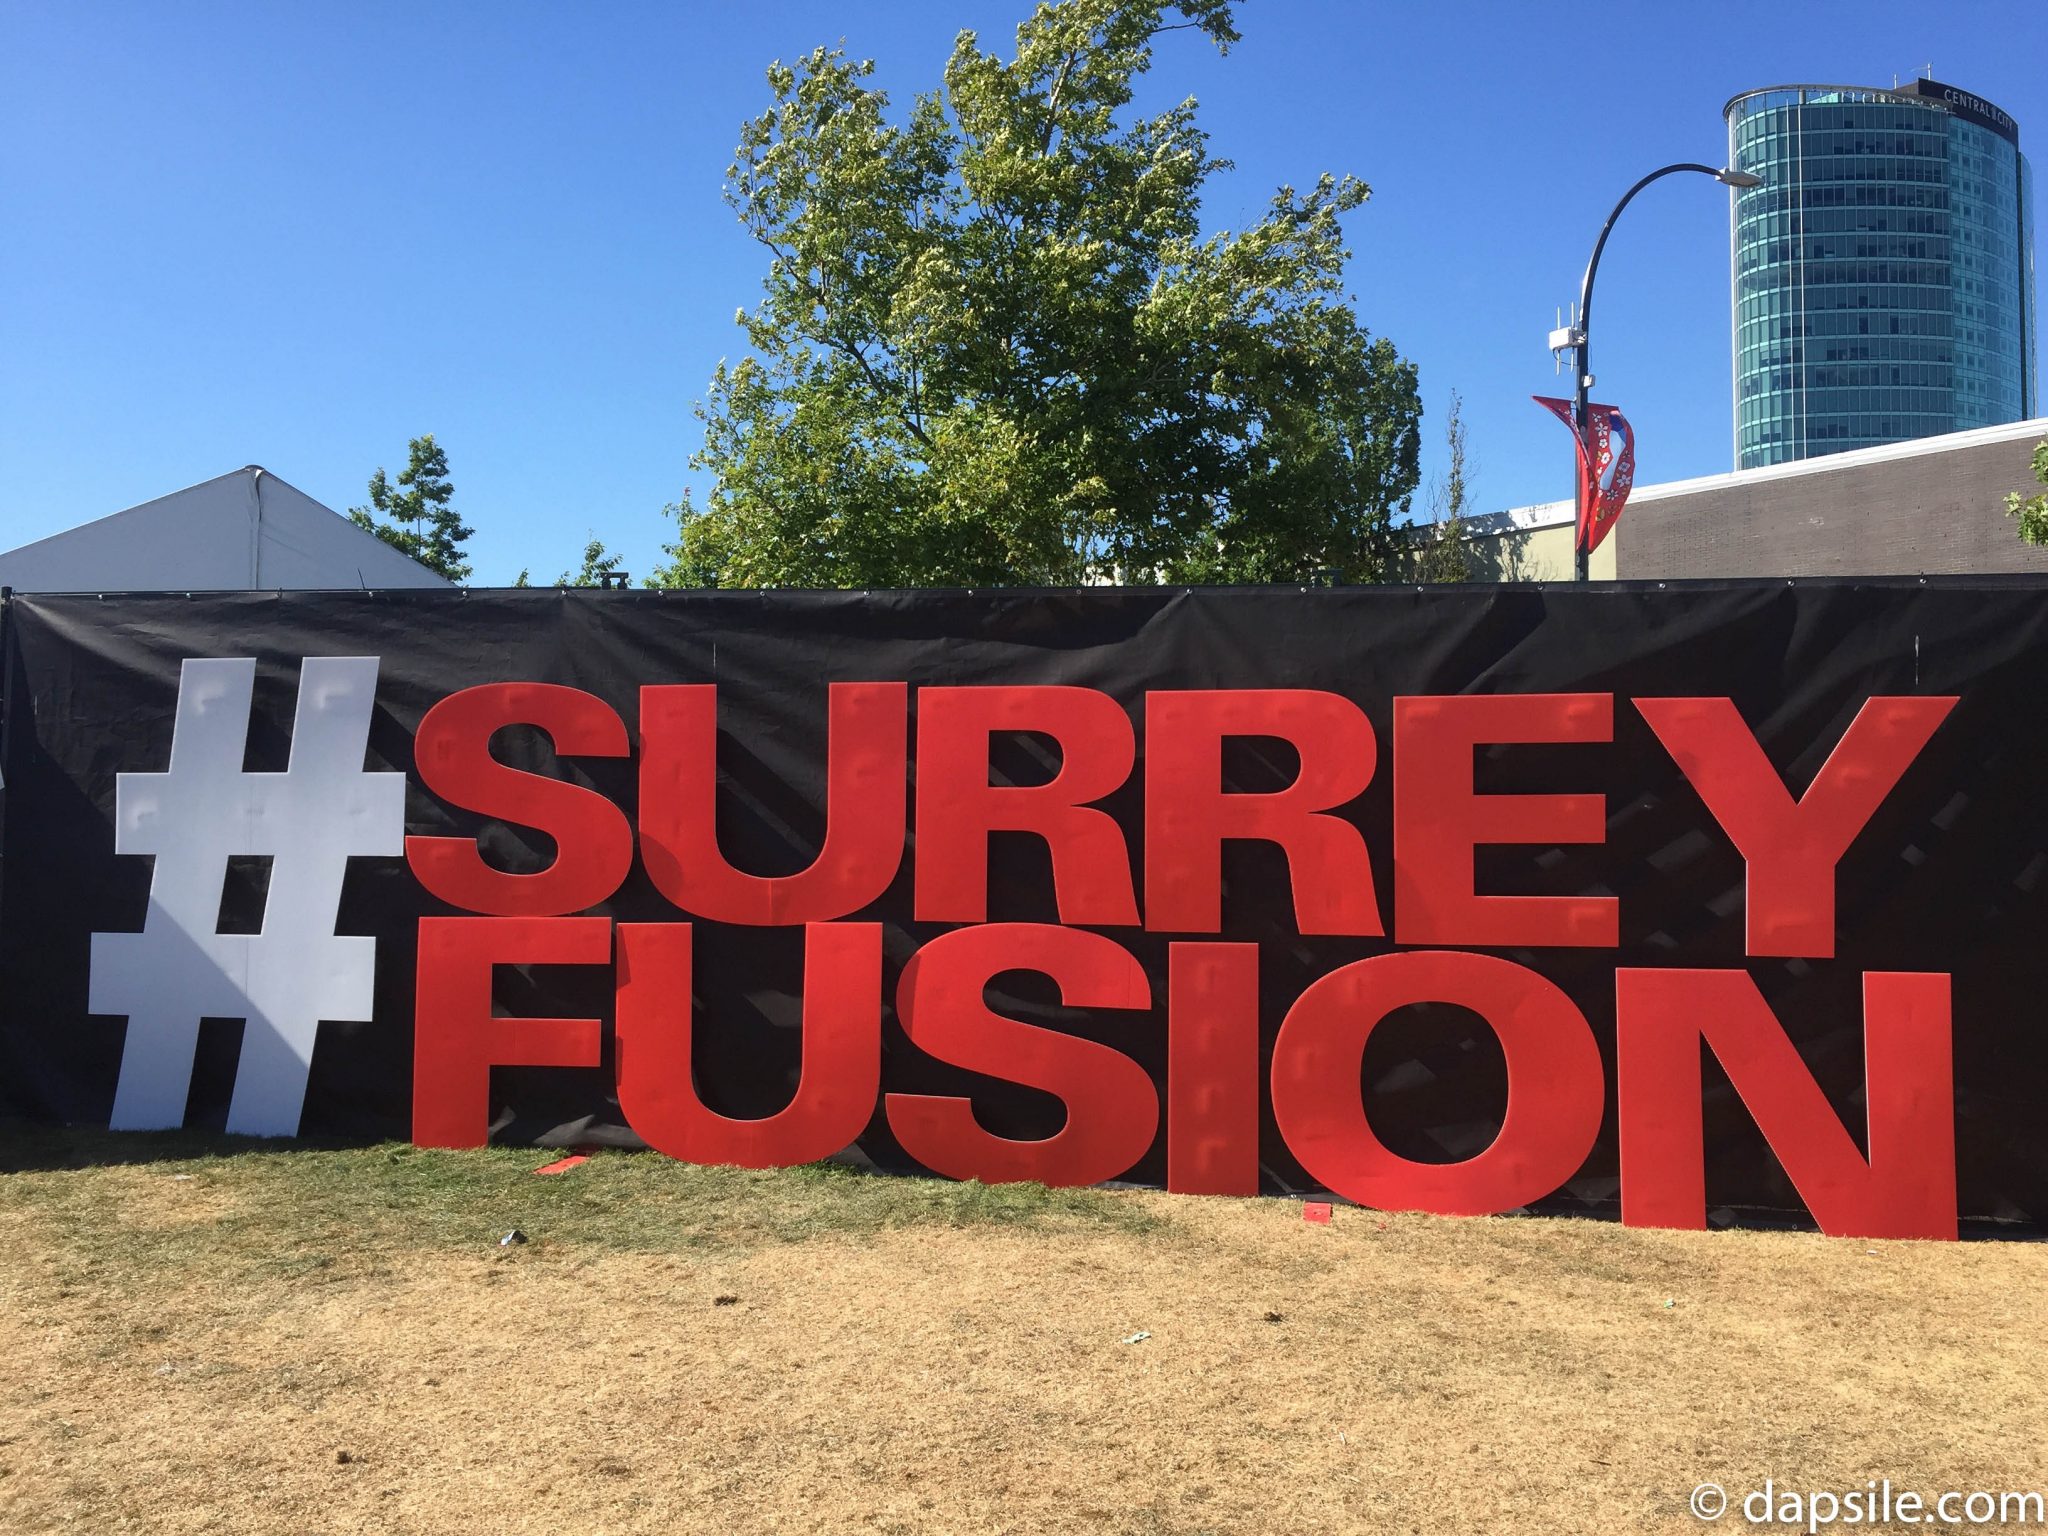 Surrey Fusion Hashtag Sign